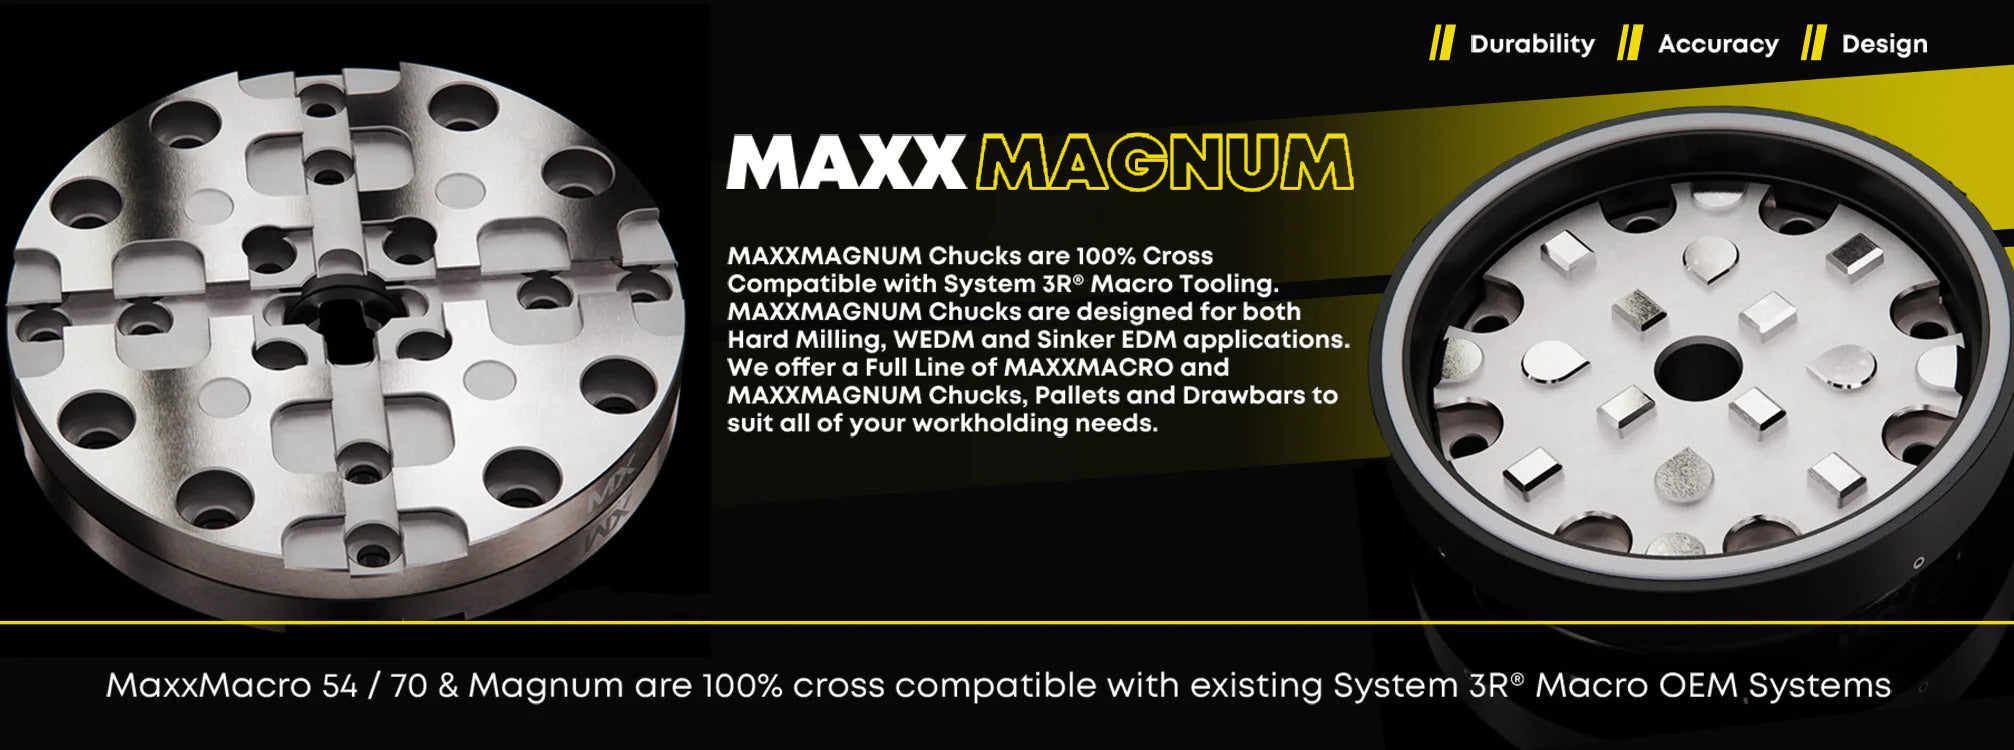 MaxxMacro MaxxMagnum